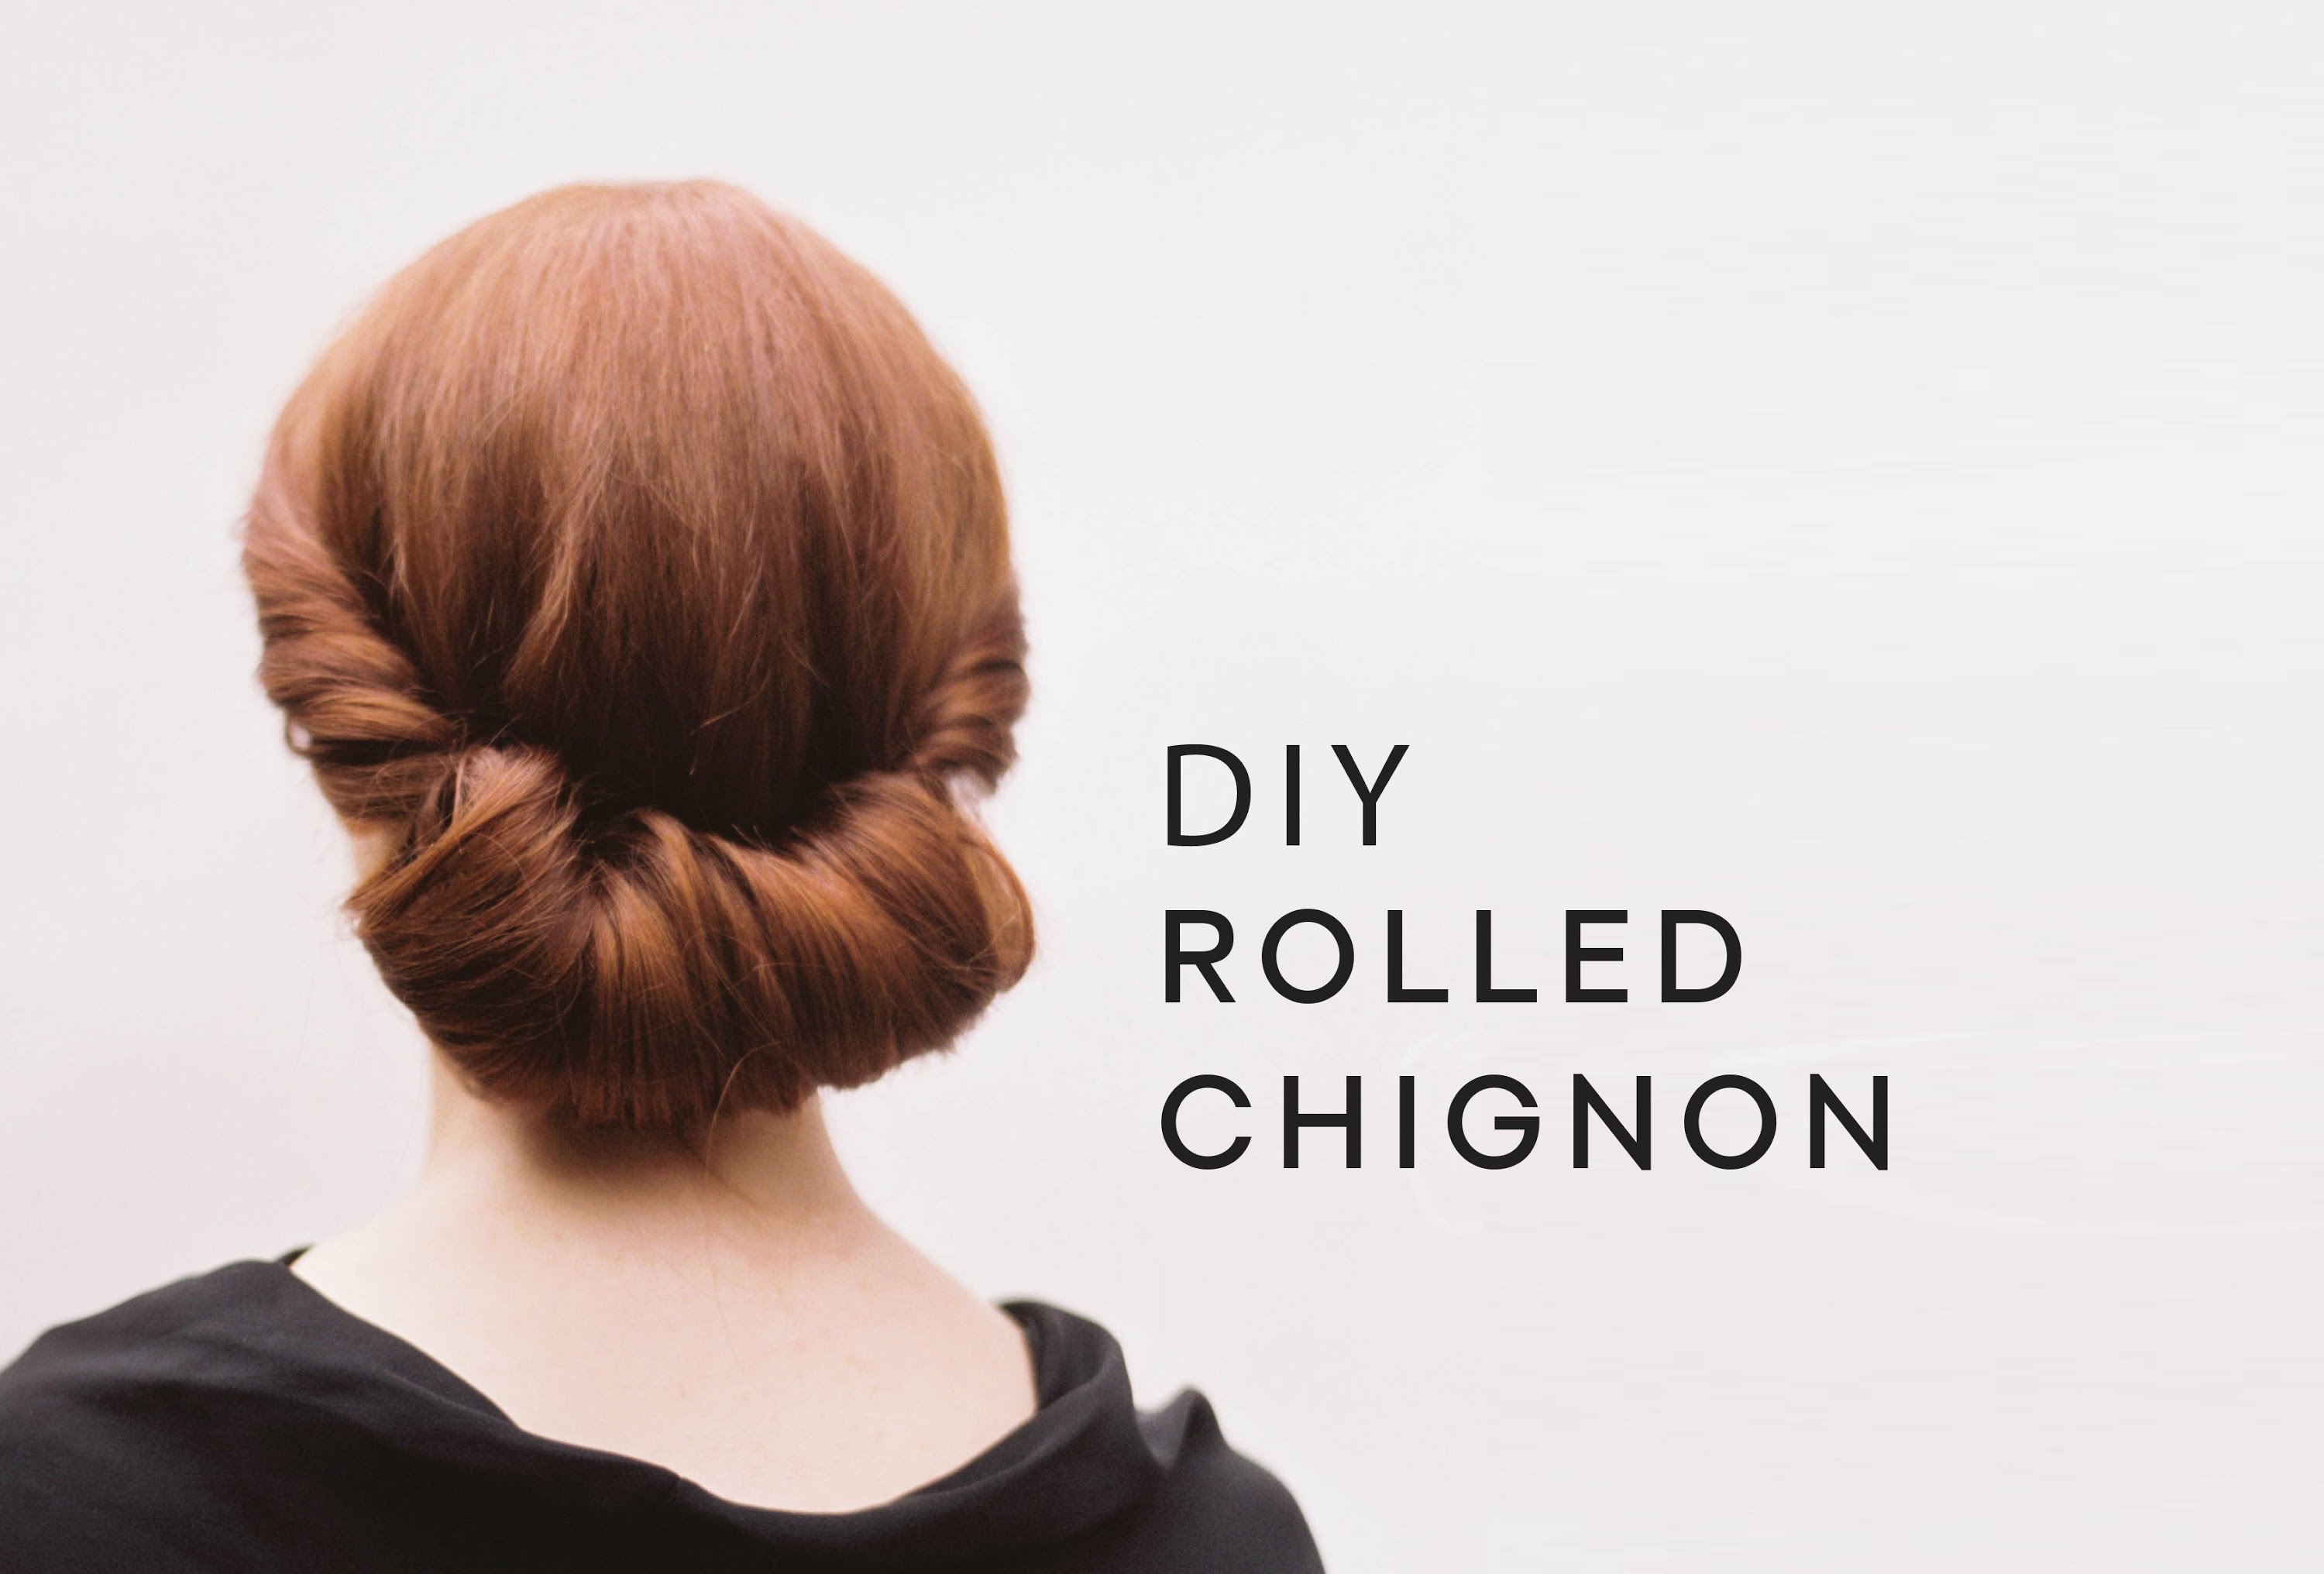 Rolled chignon hair tutorial